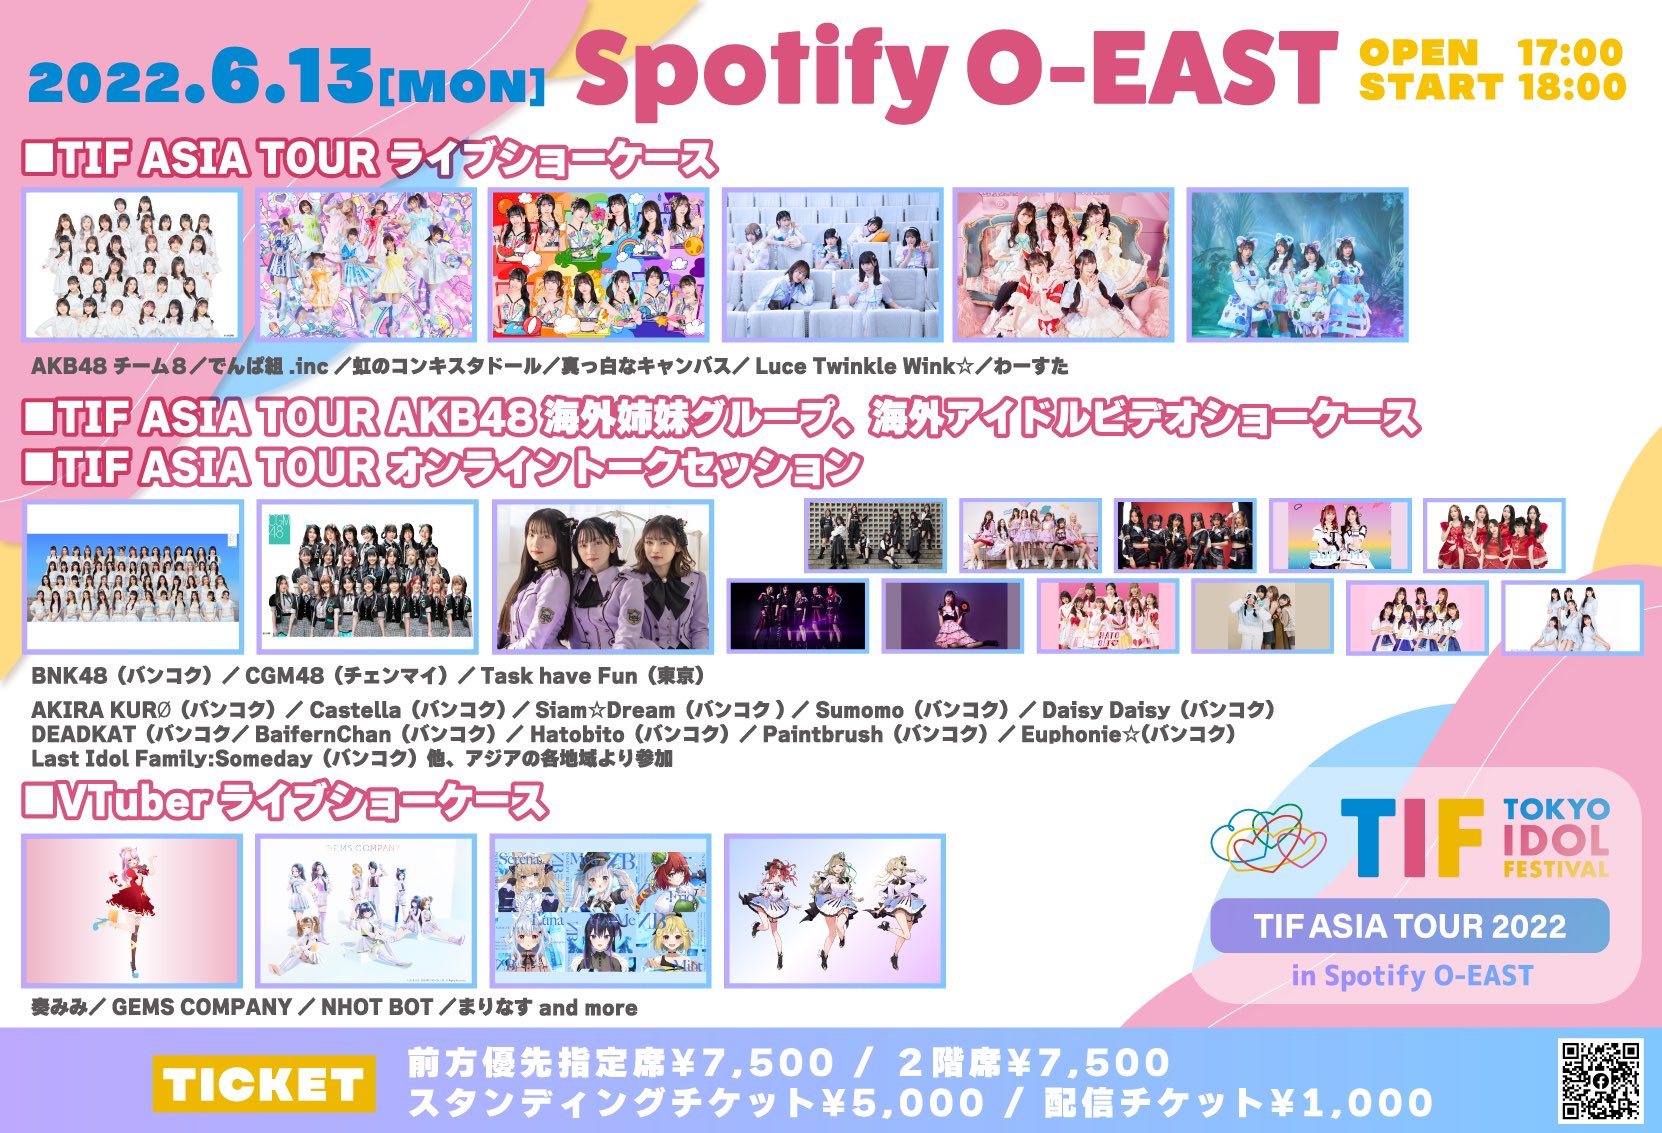 TIF ASIA TOUR 2022 (Tokyo Idol Festival ) Pantip